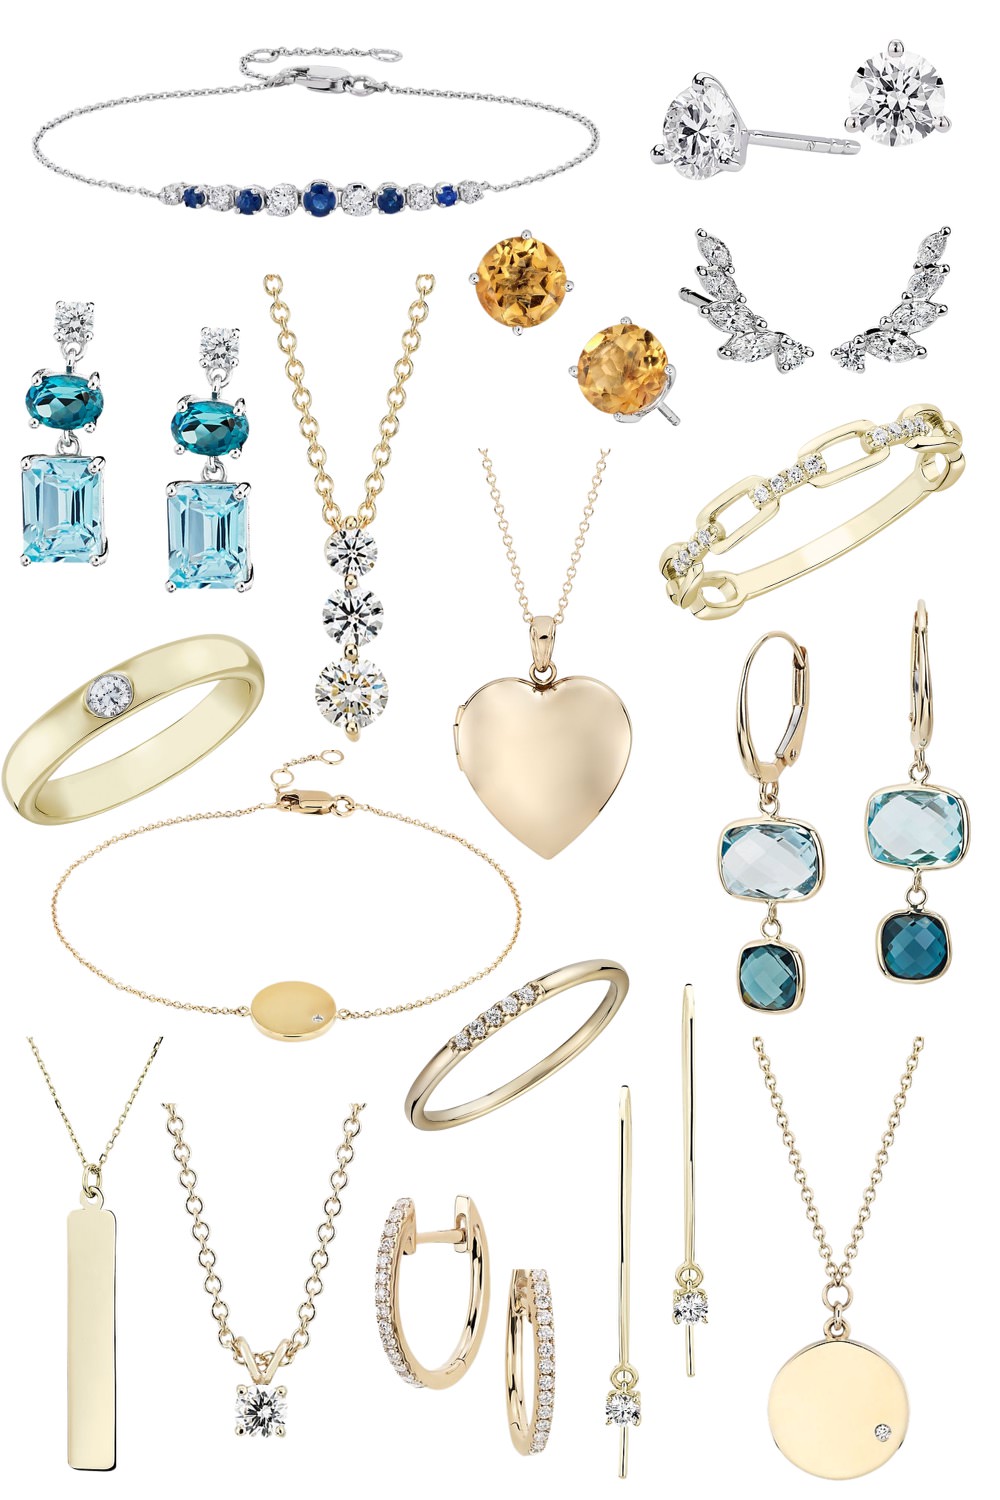 blue nile holiday jewelry